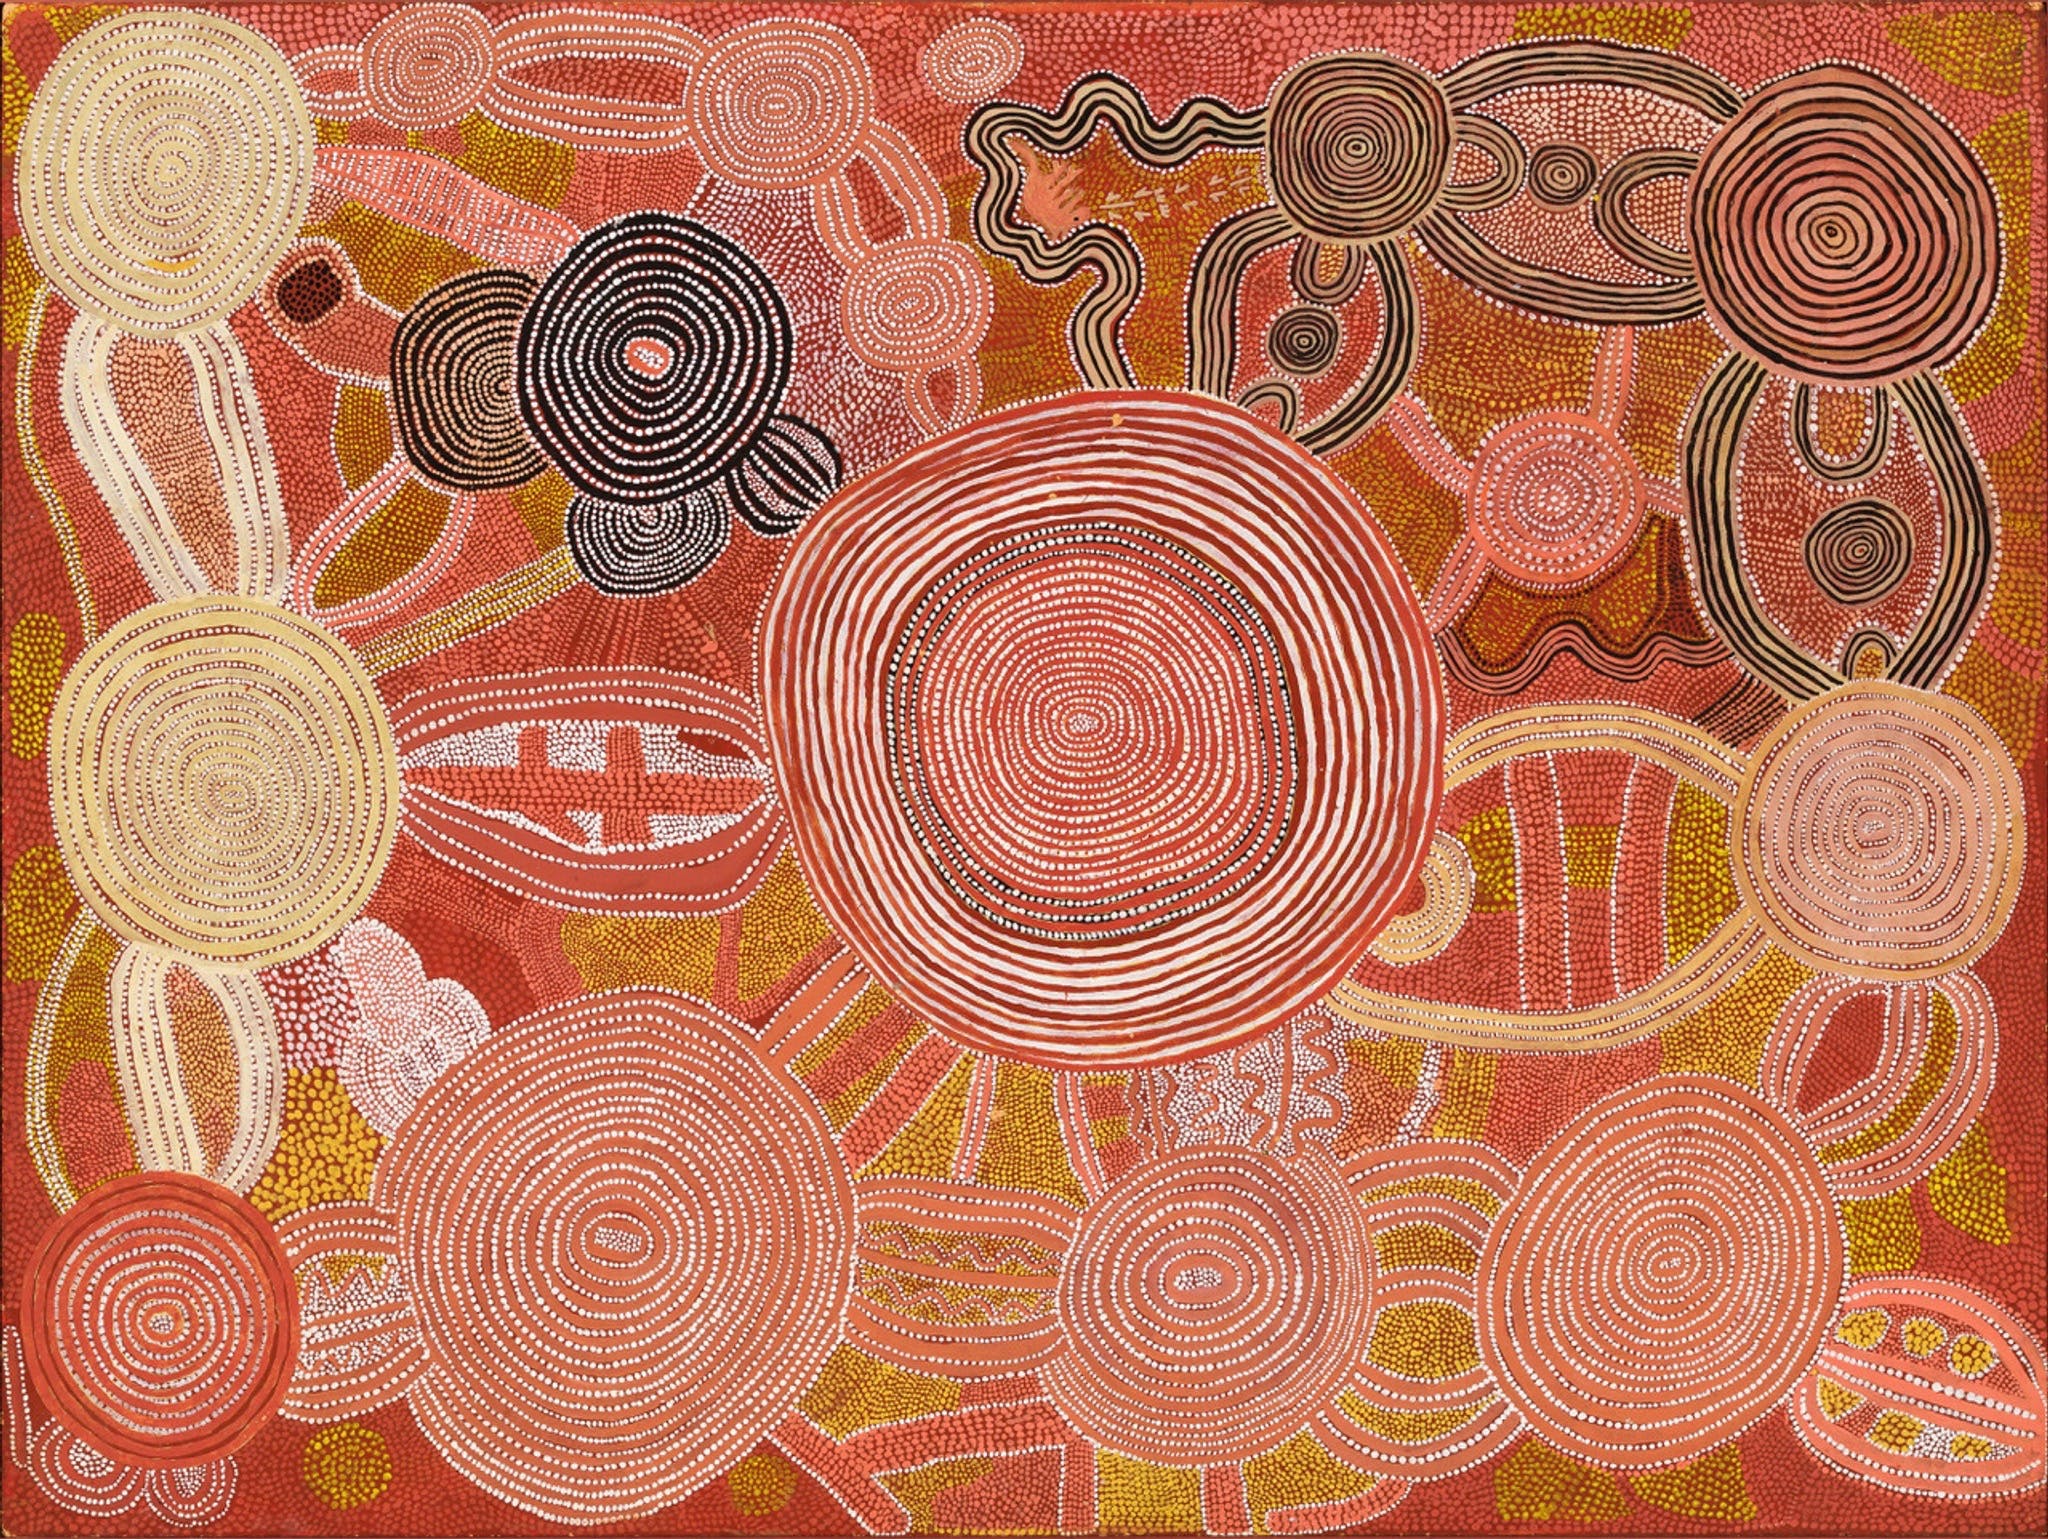 Reverence Exhibition of Australian Indigenous Art - Melbourne Tourism